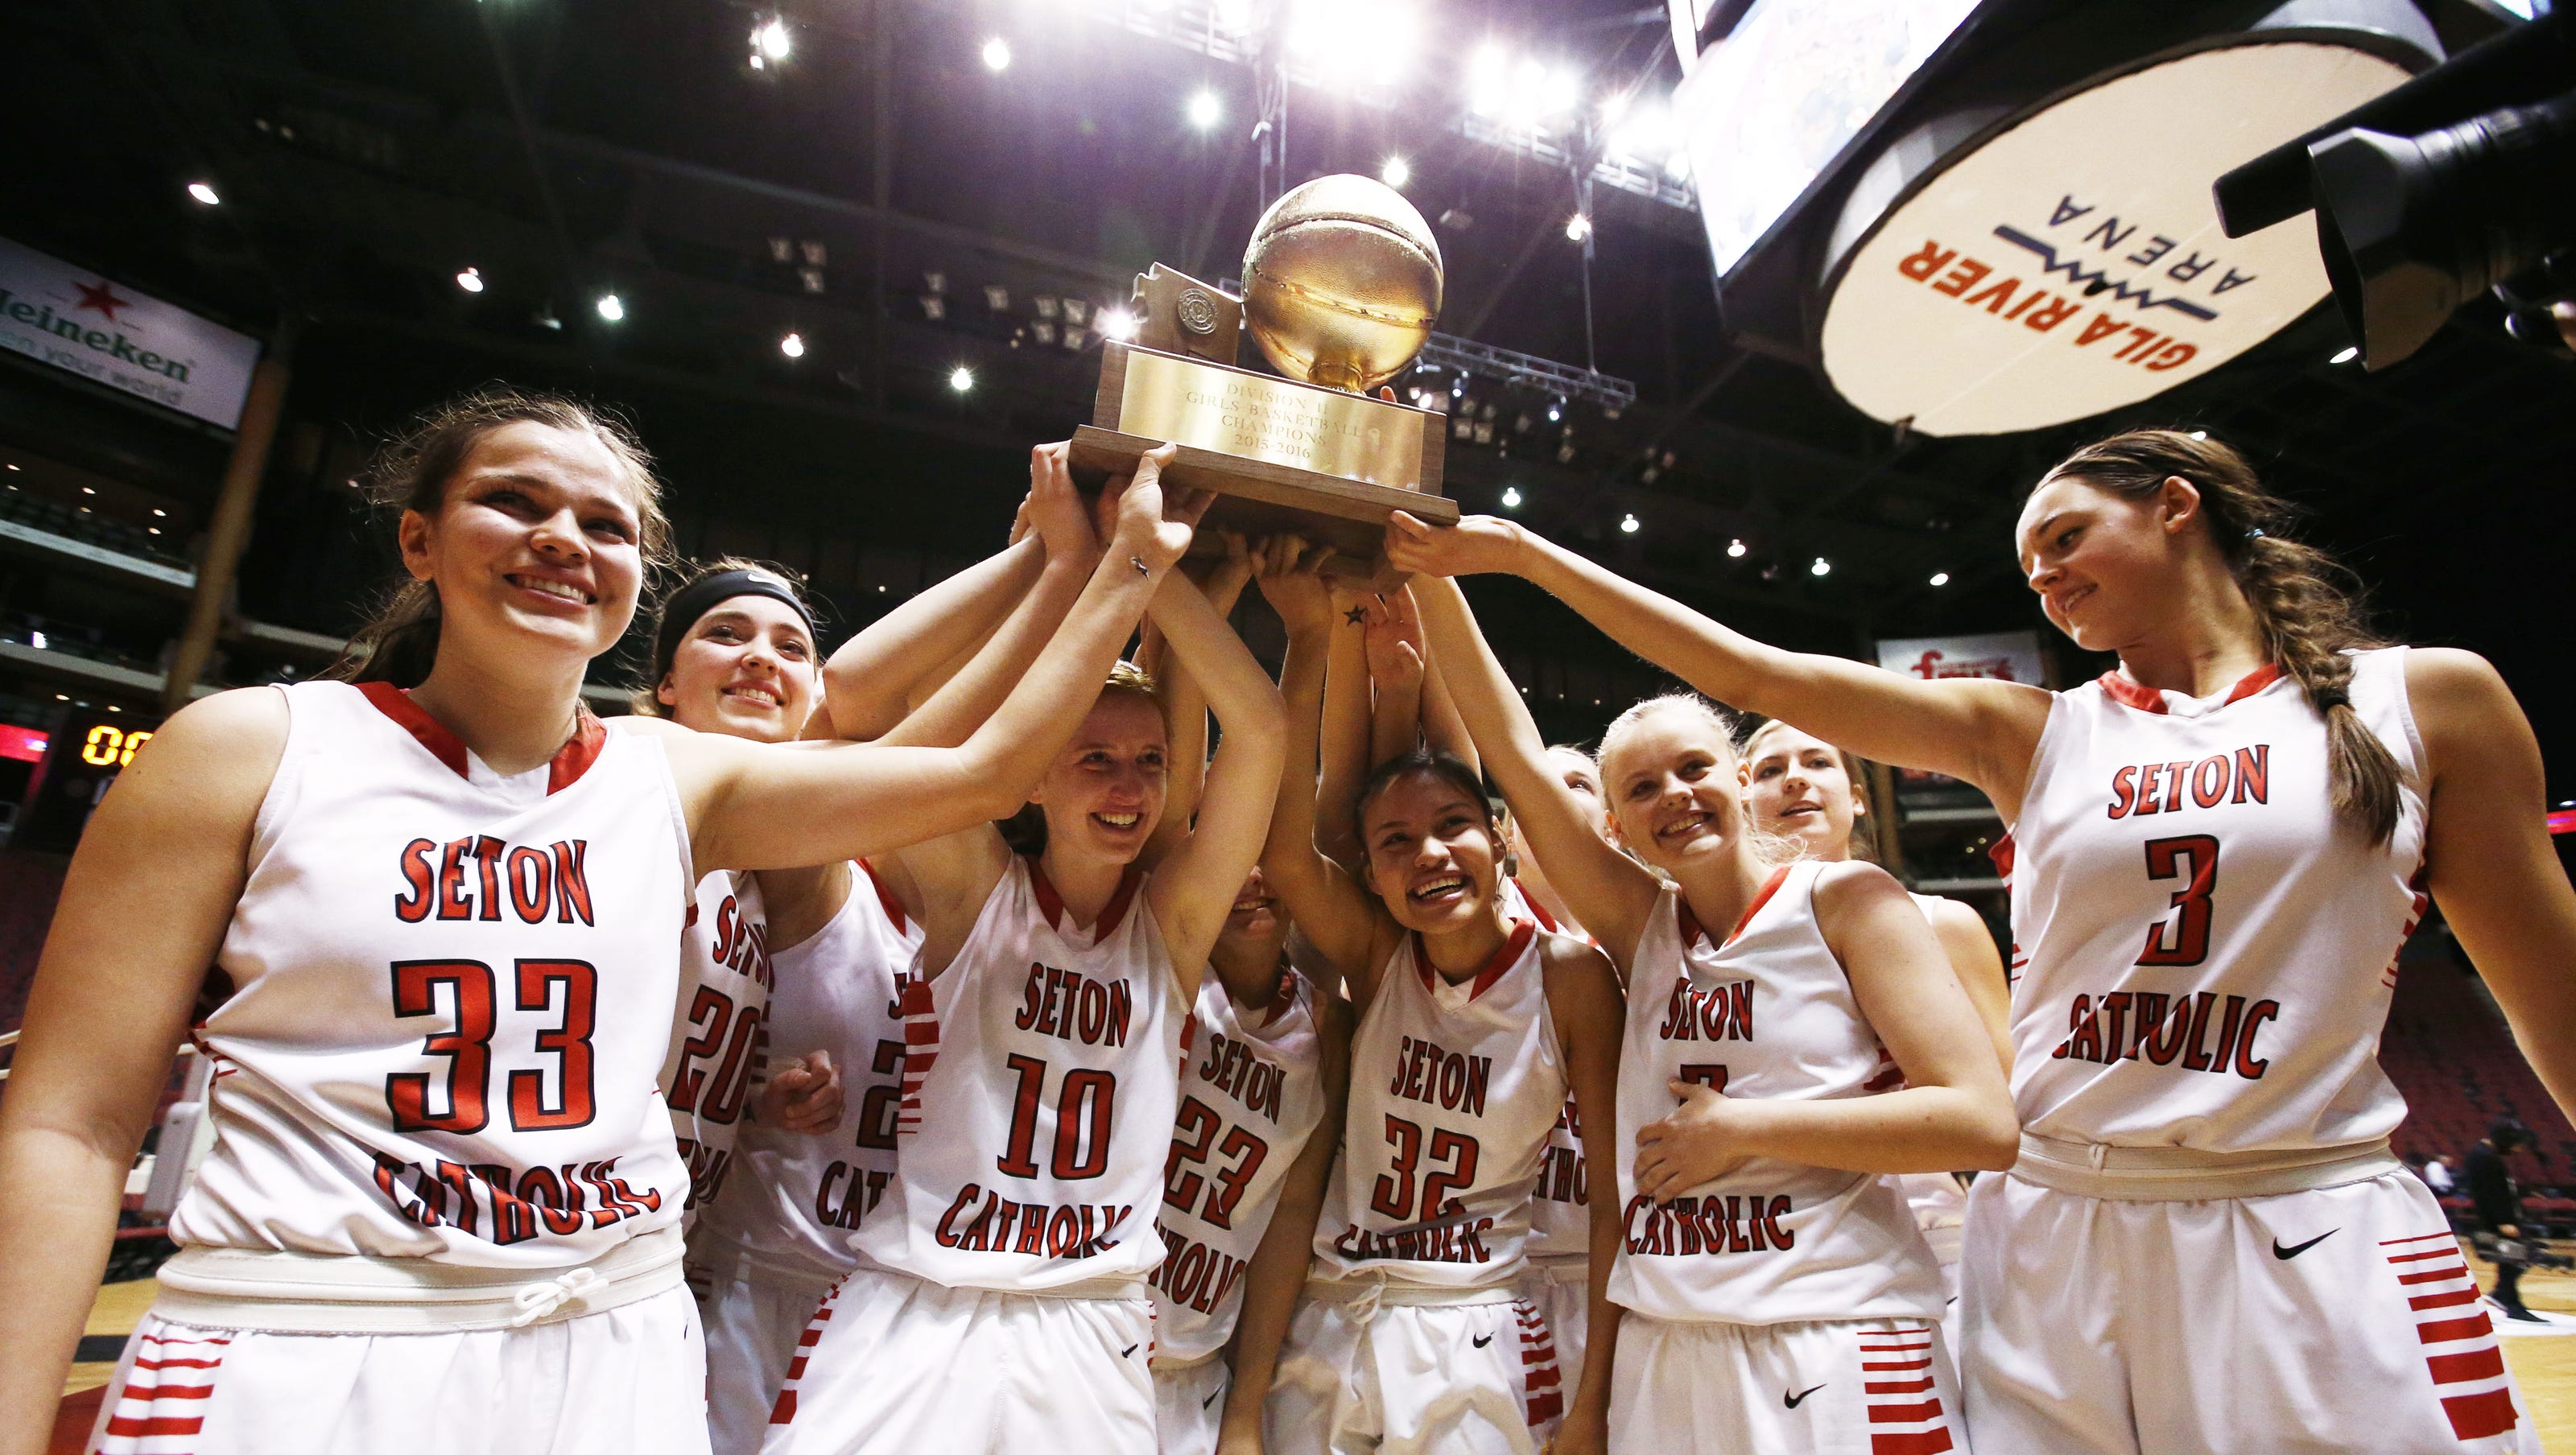 Arizona's best high school girls basketball programs ranked by titles